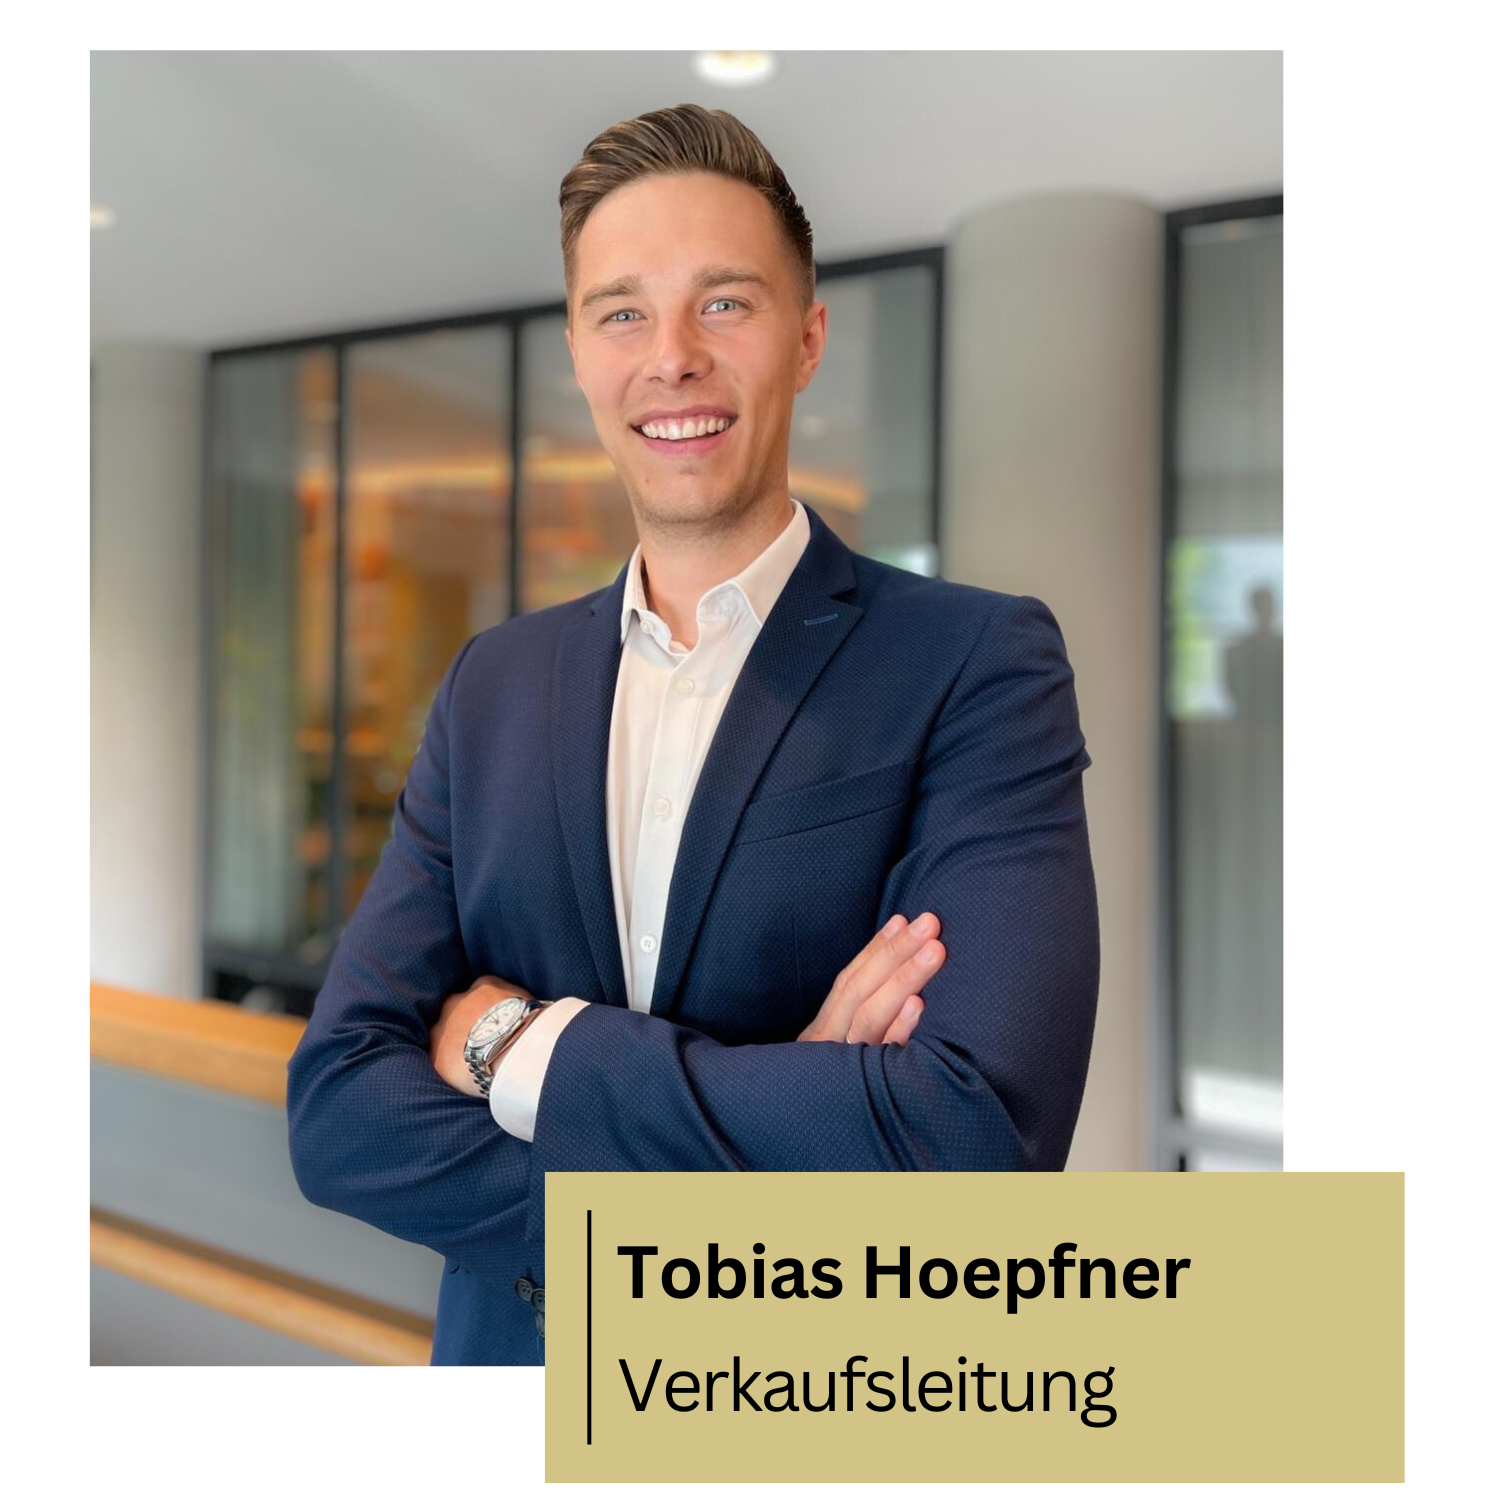 Tobias Hoepfner